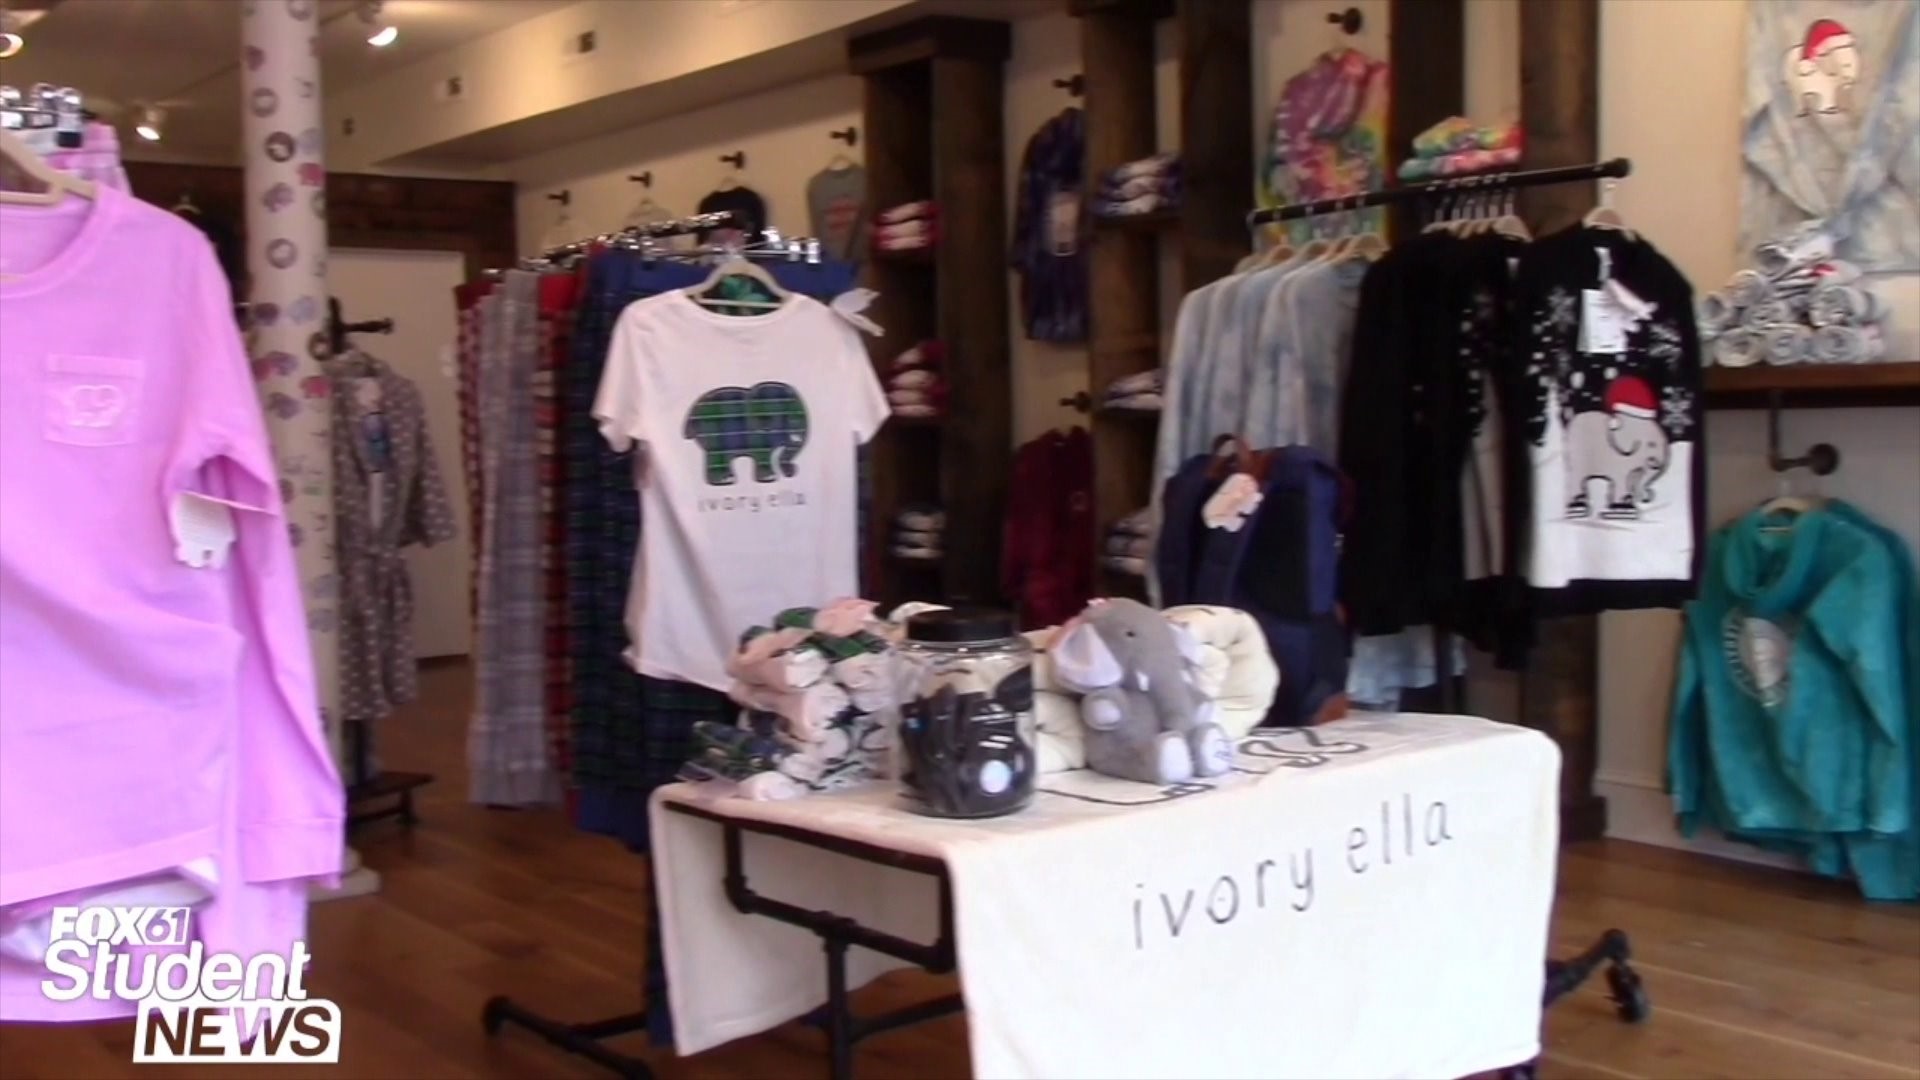 Ivoryella: A clothing store that gives back